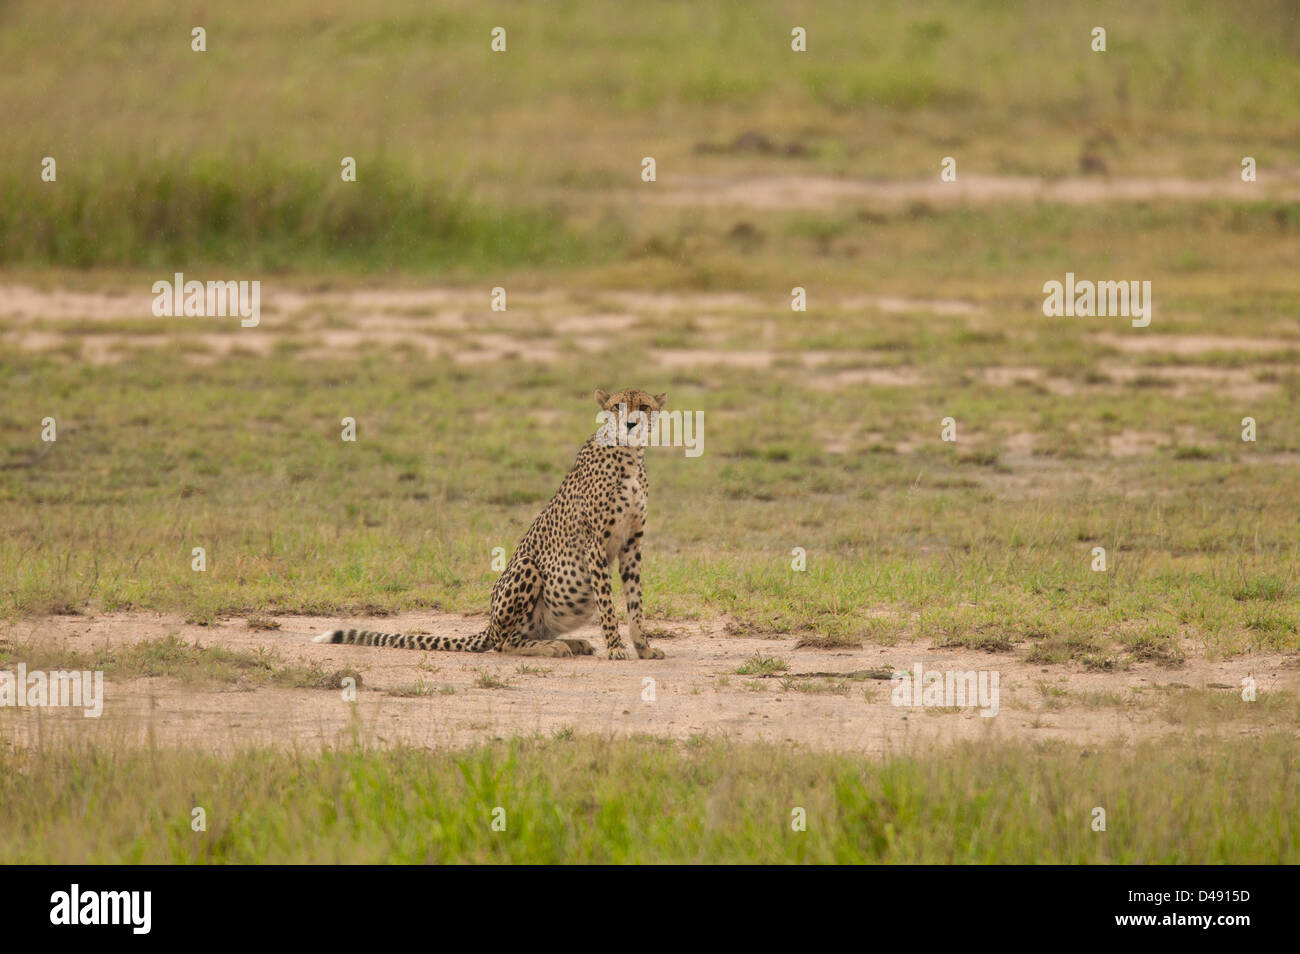 Cheetah (Acinonyx jubatus) sitting out in an open grassland space Stock Photo